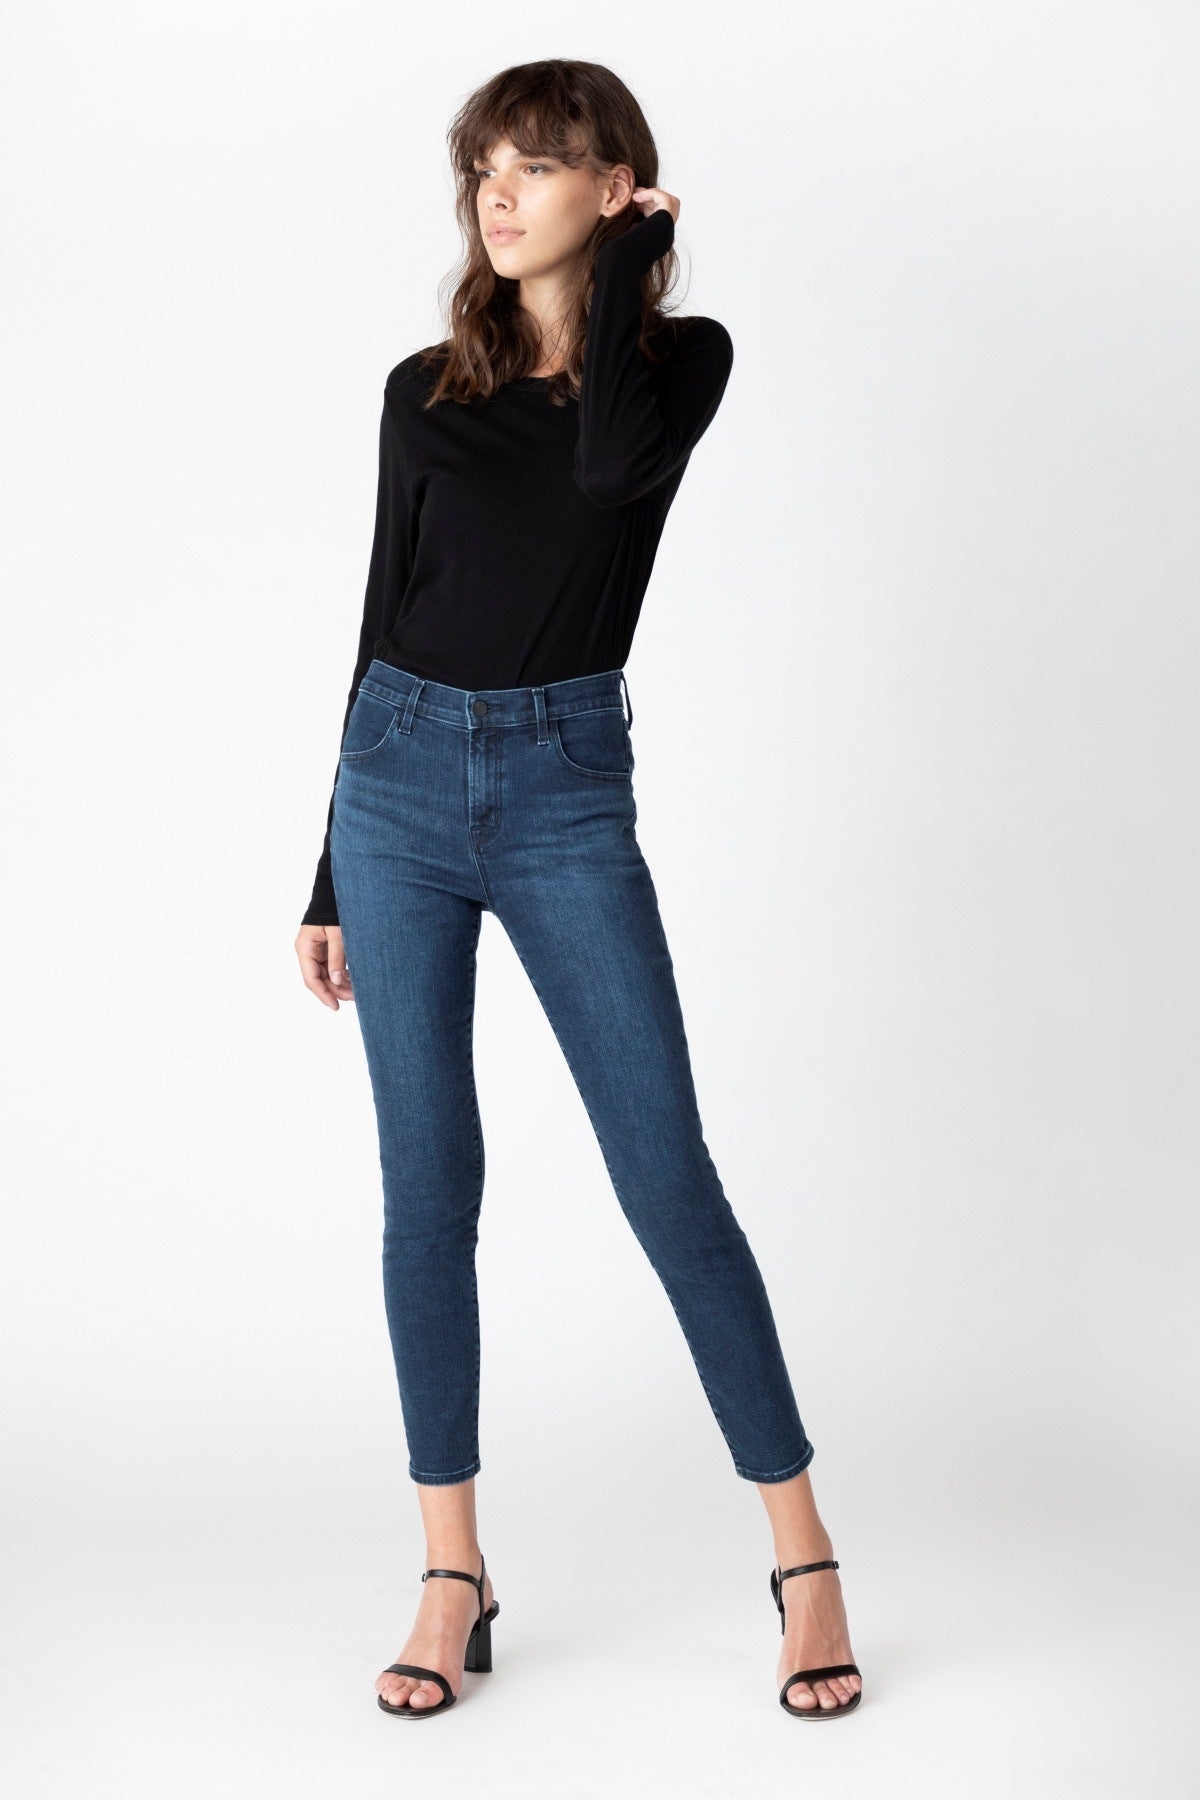 J Brand Alana Crop High Rise Jeans in Vanity